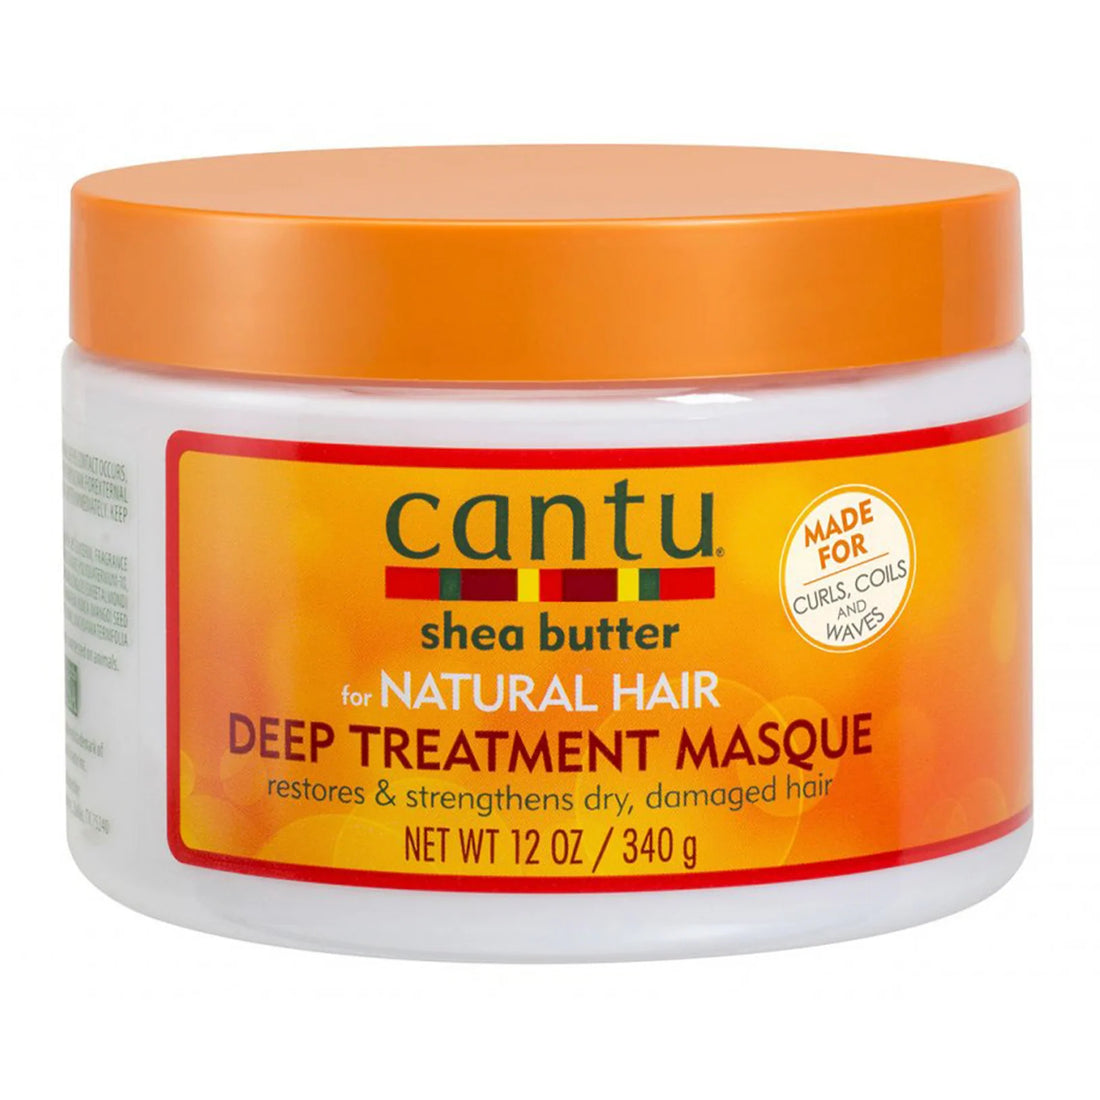 Cantu Shea Butter Deep Treatment Masque for Natural Hair 340g